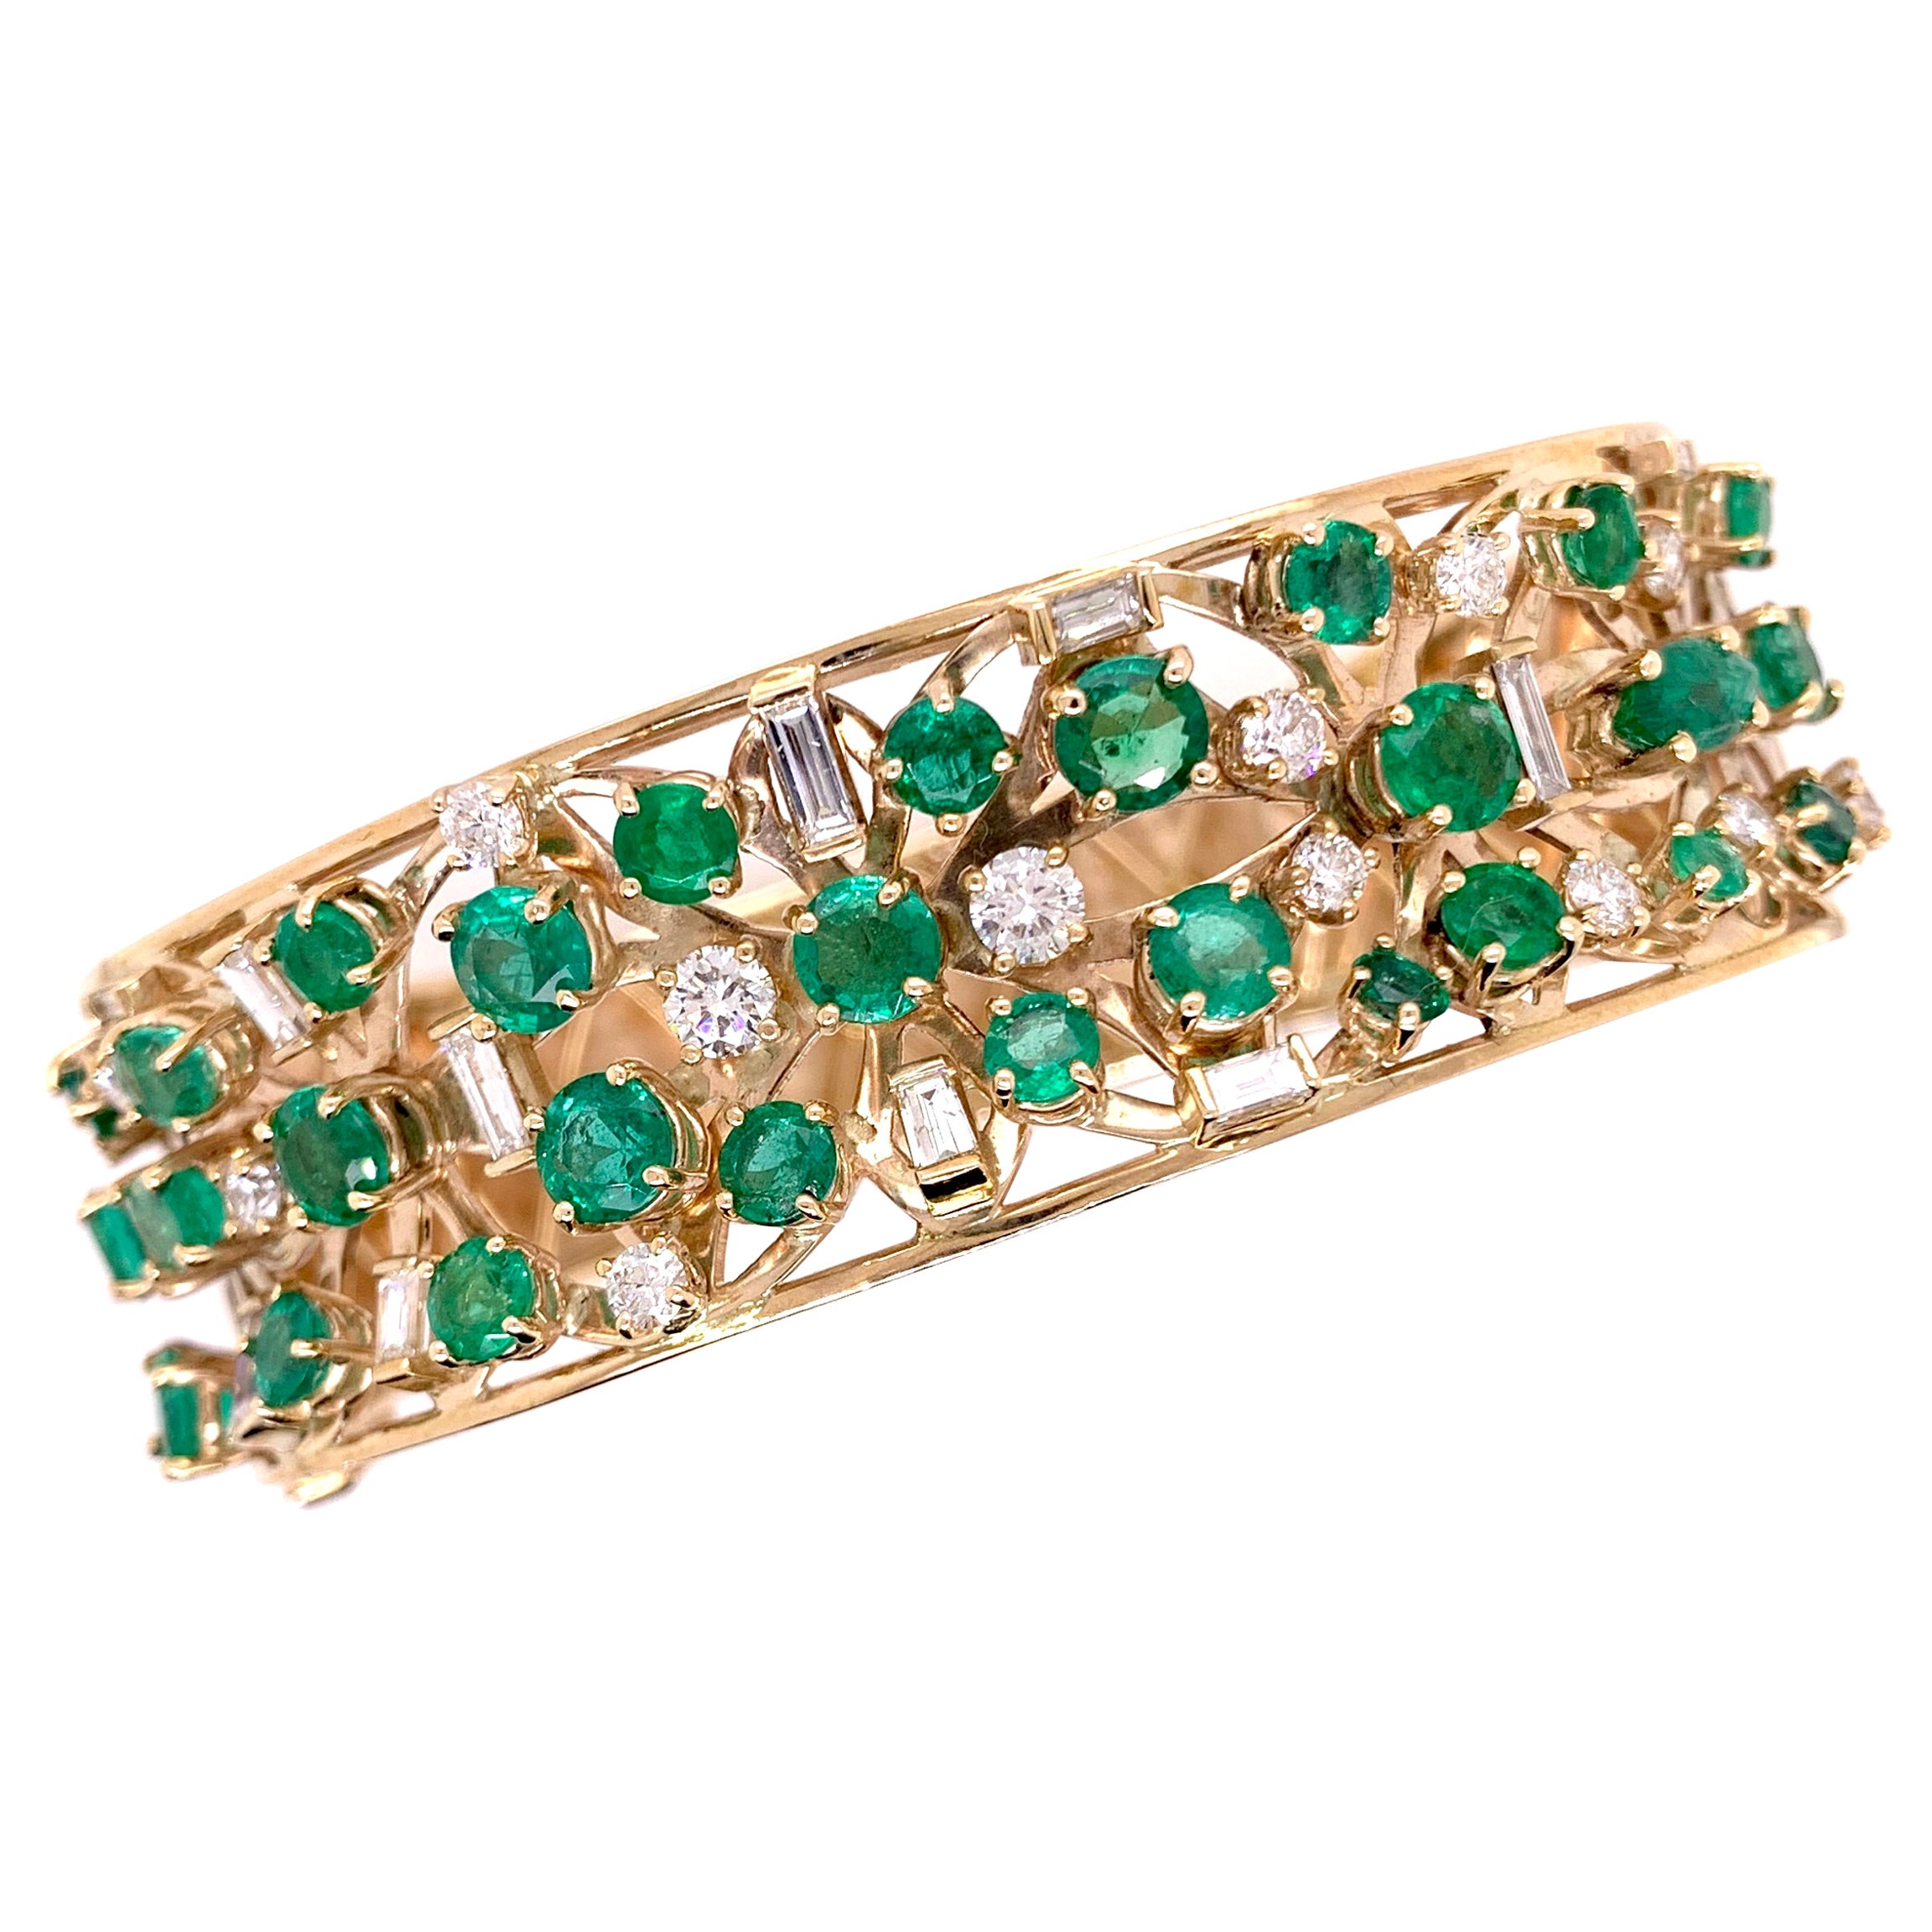 Emerald and Diamond Cuff Bangle Bracelet in 14k Yellow Gold